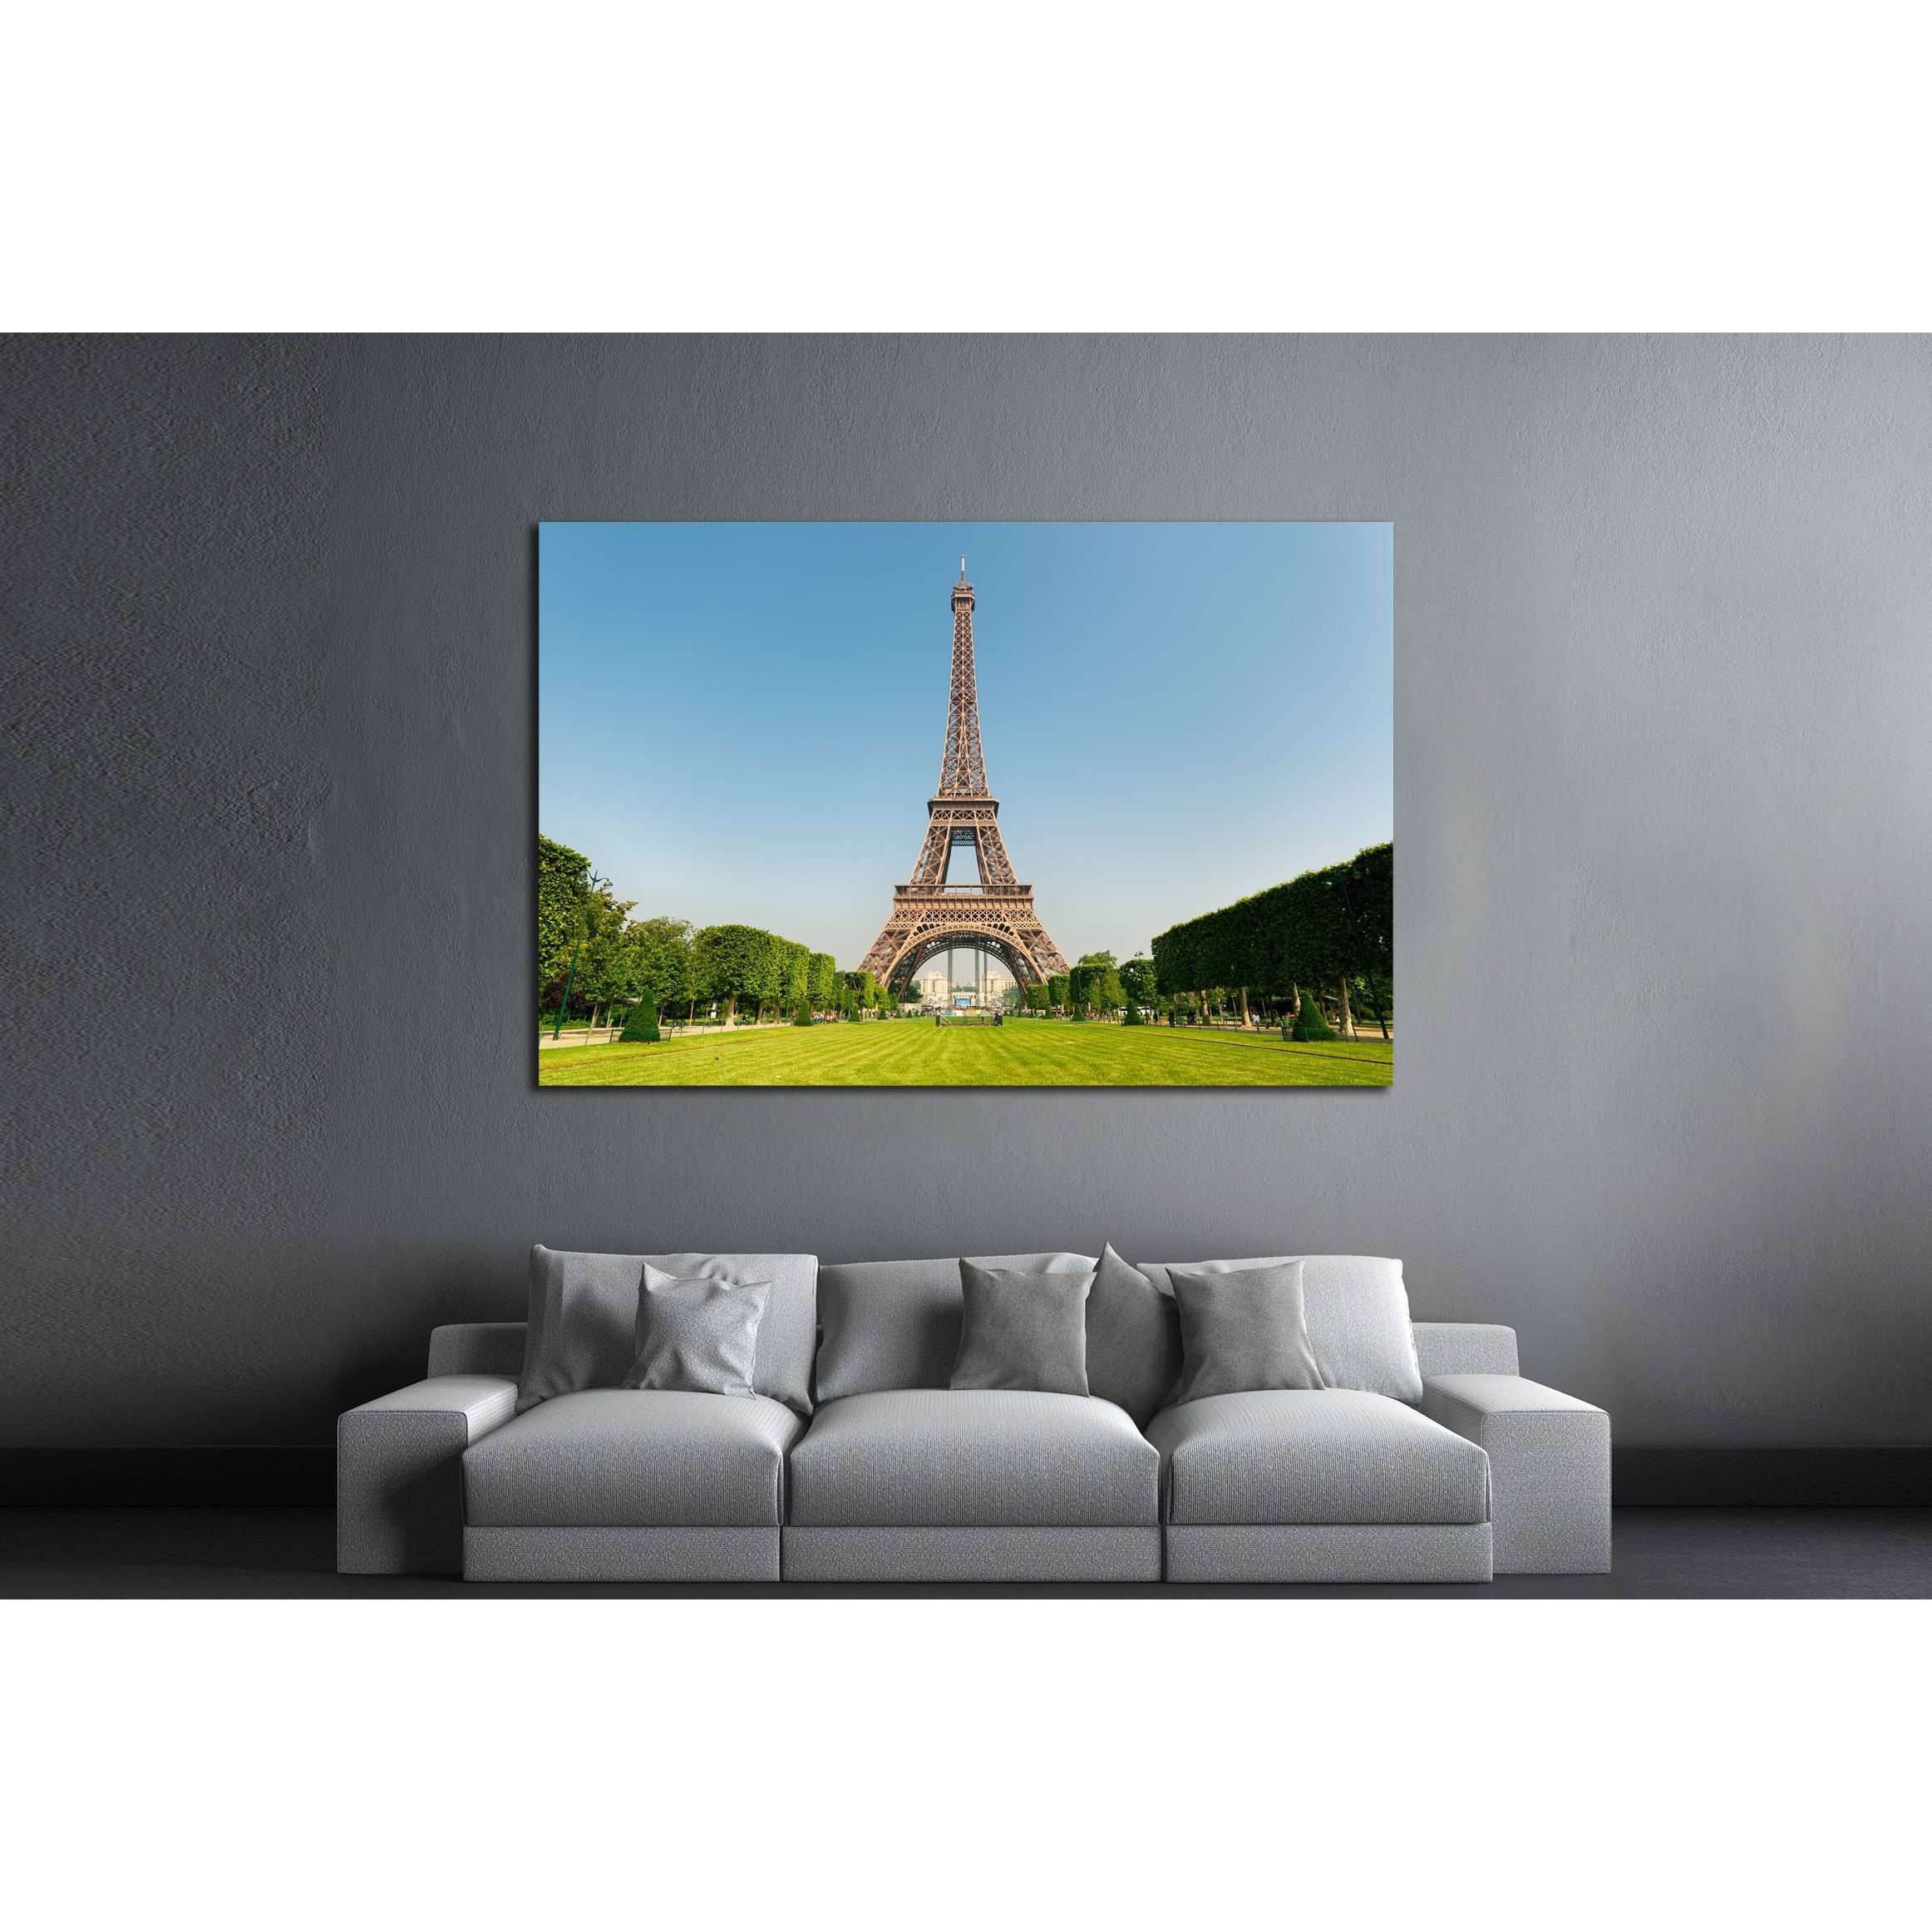 Eiffel Tower, Paris, France №2309 Ready to Hang Canvas Print